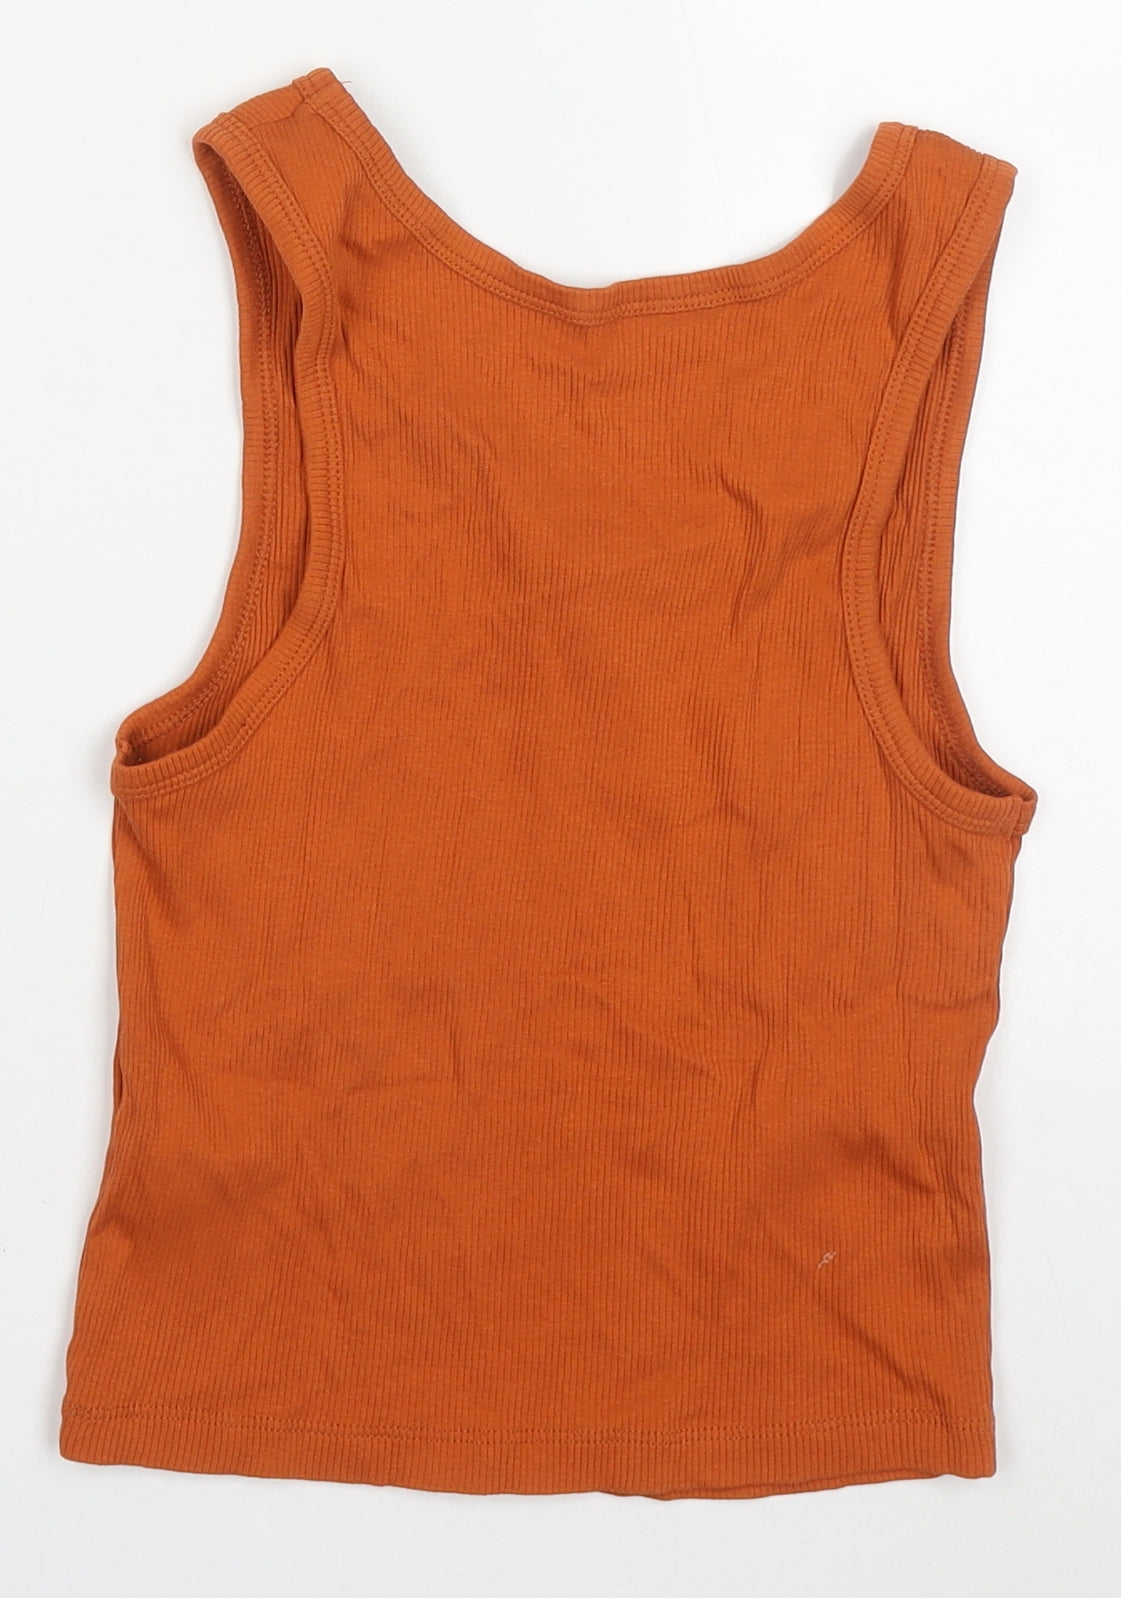 Primark Womens Orange Solid Cotton Top Pyjama Top Size 12